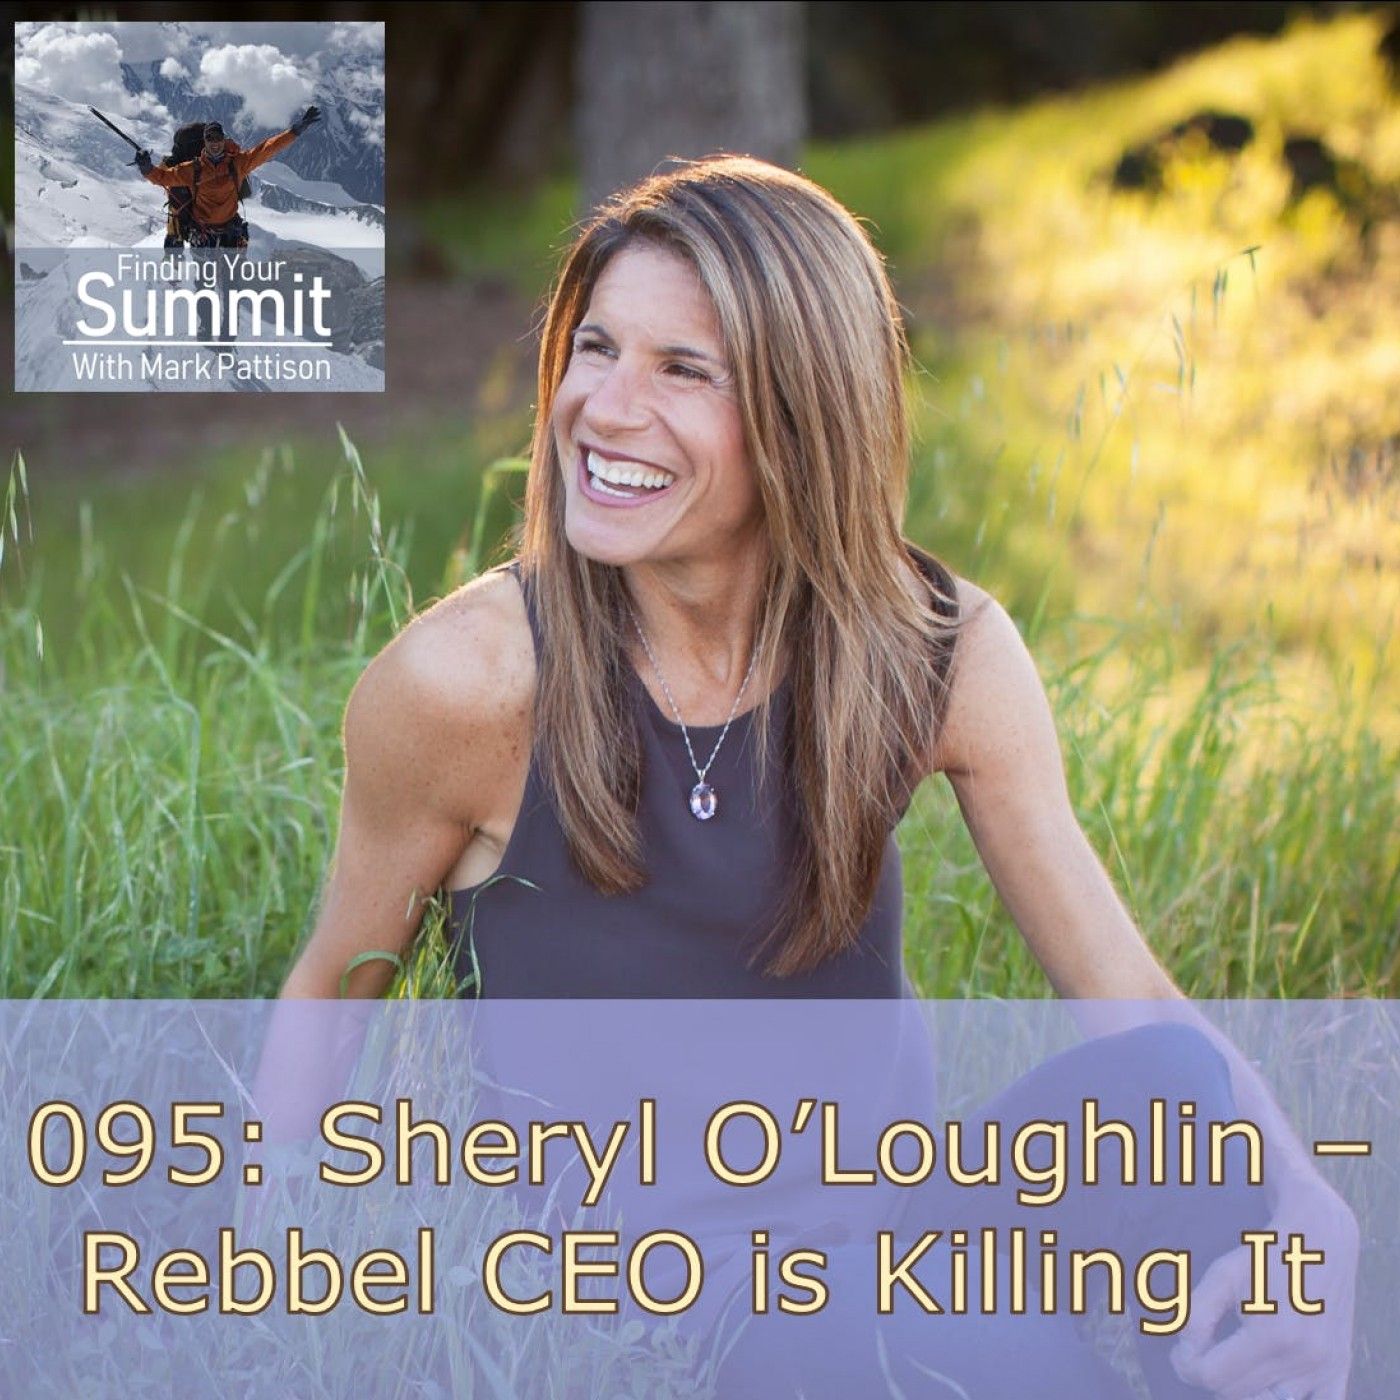 Sheryl O’Loughlin - Rebbel CEO is Killing It